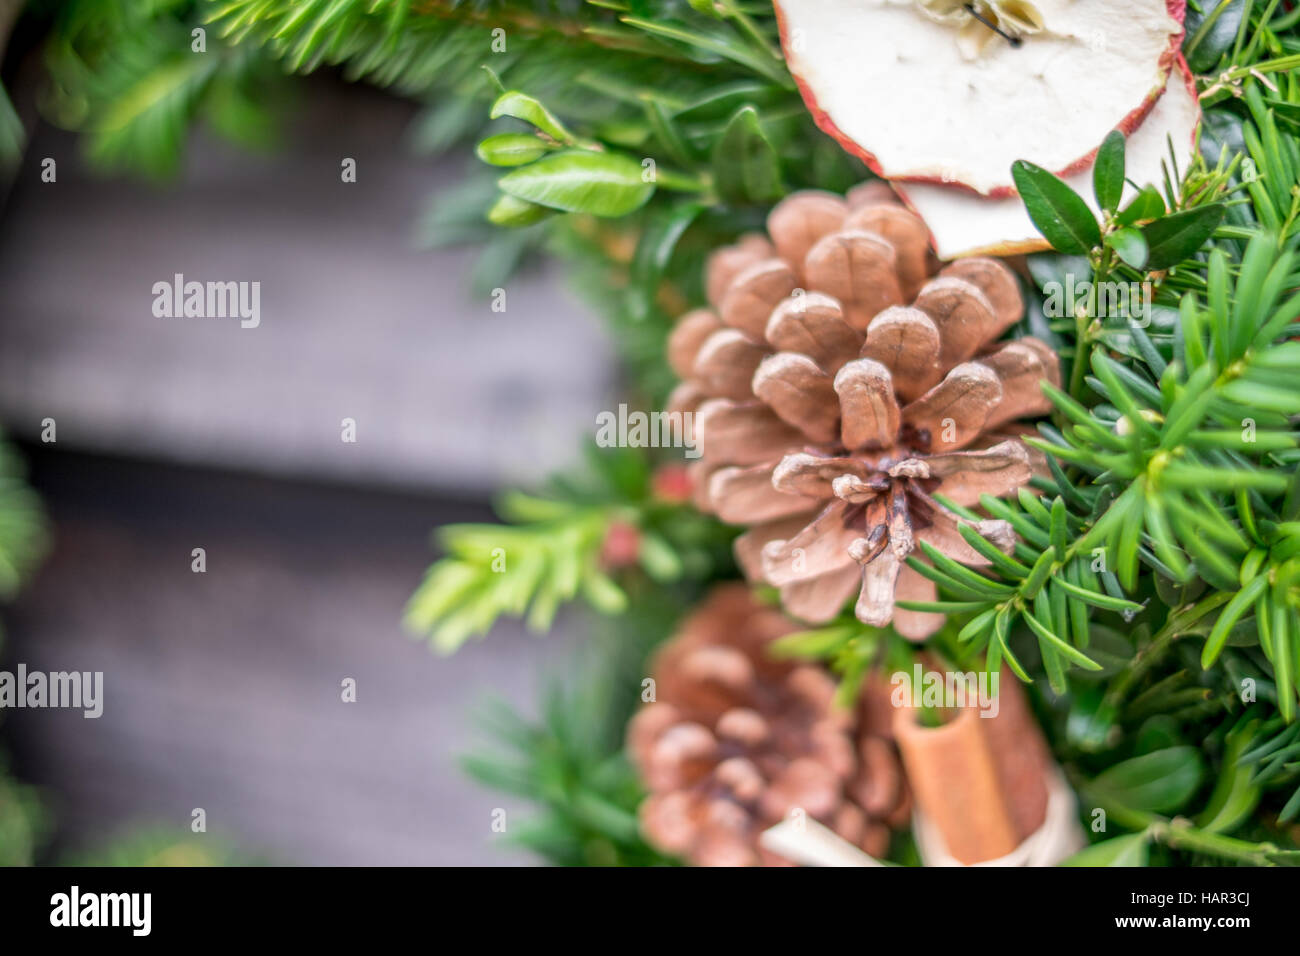 Wreath Christmas wood rustic greenery pine cone pinecone oranges festive holiday happy decoration decor Stock Photo